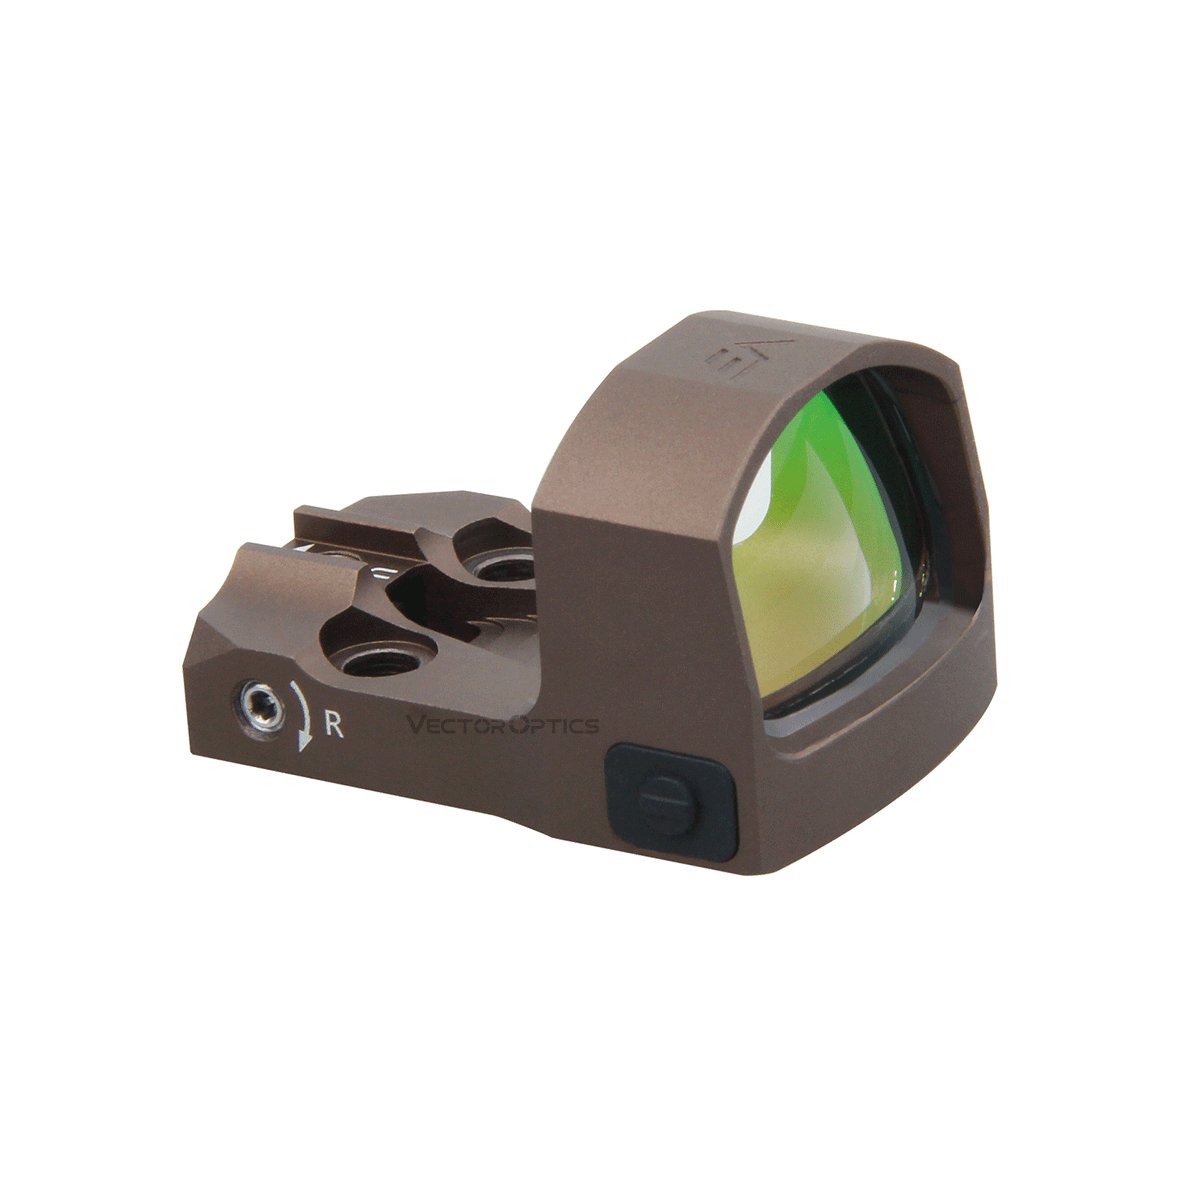 Vector Optics Frenzy Mini Dot Sight Waterproof Pistol GLOCK Micro Red Dot  Sight - Airsoft Shop Japan